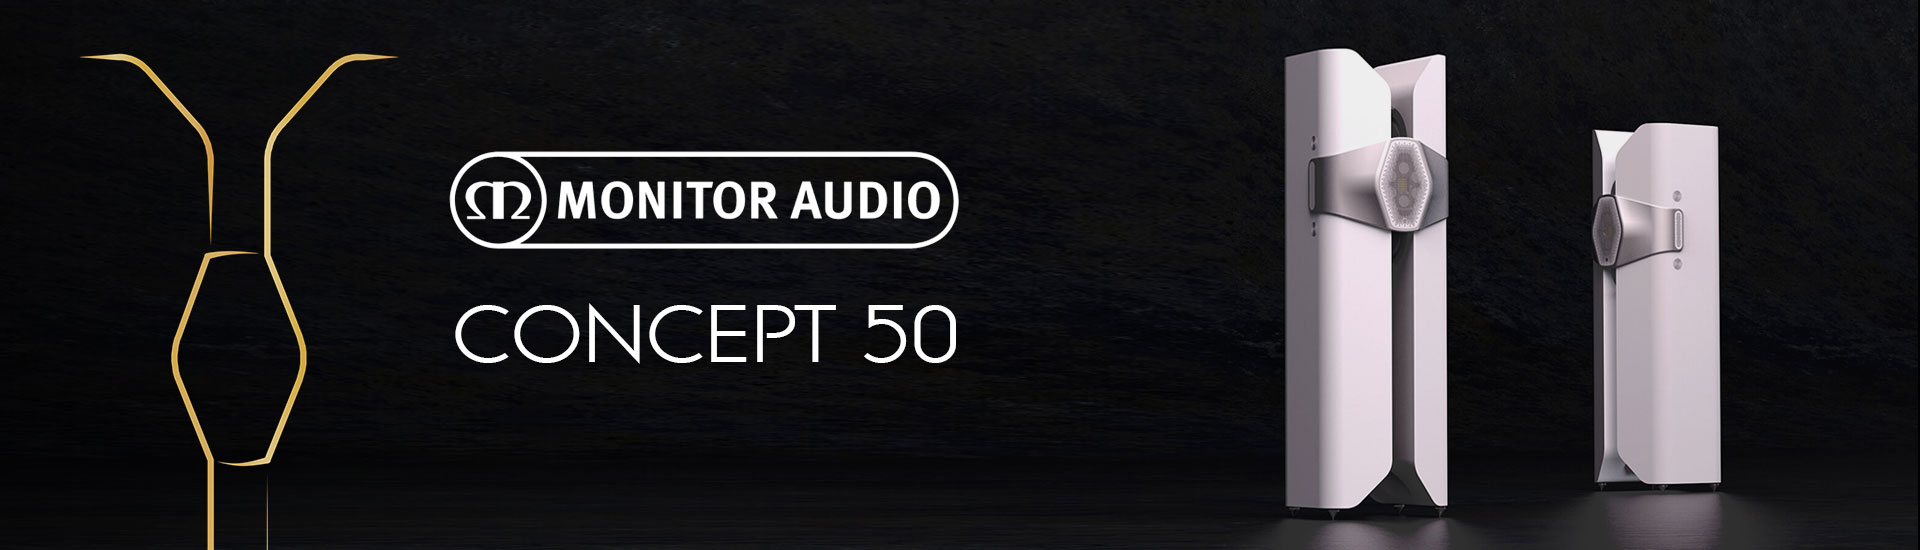 Monitor Audio Concept 50